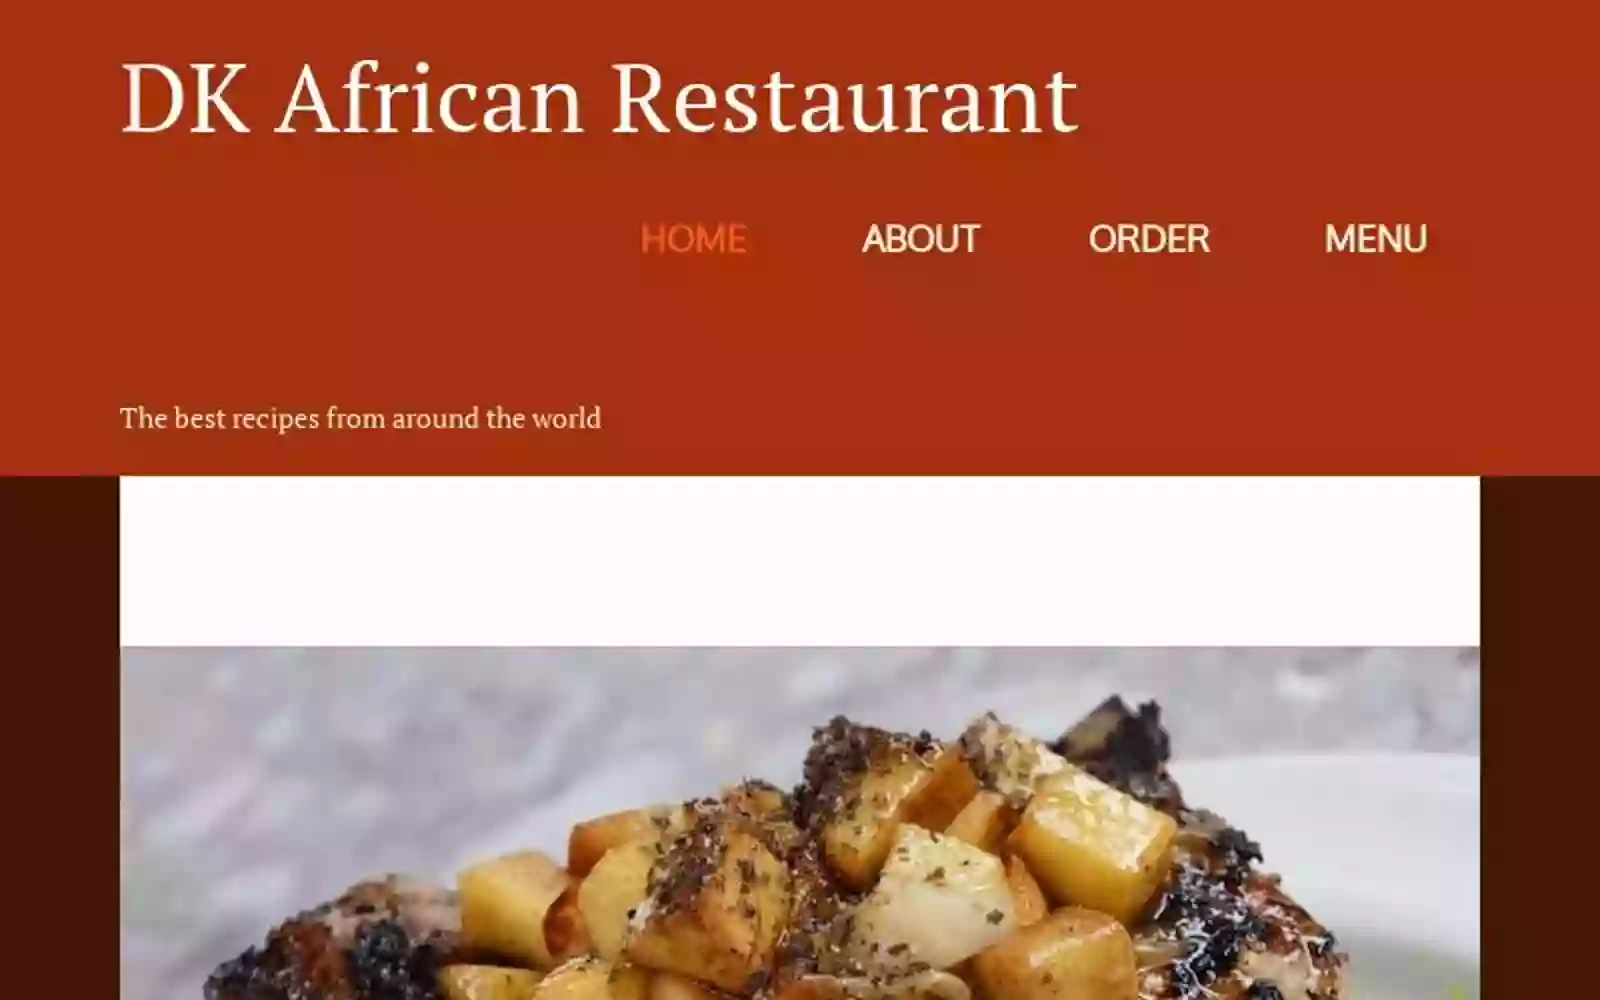 DK African Restaurant